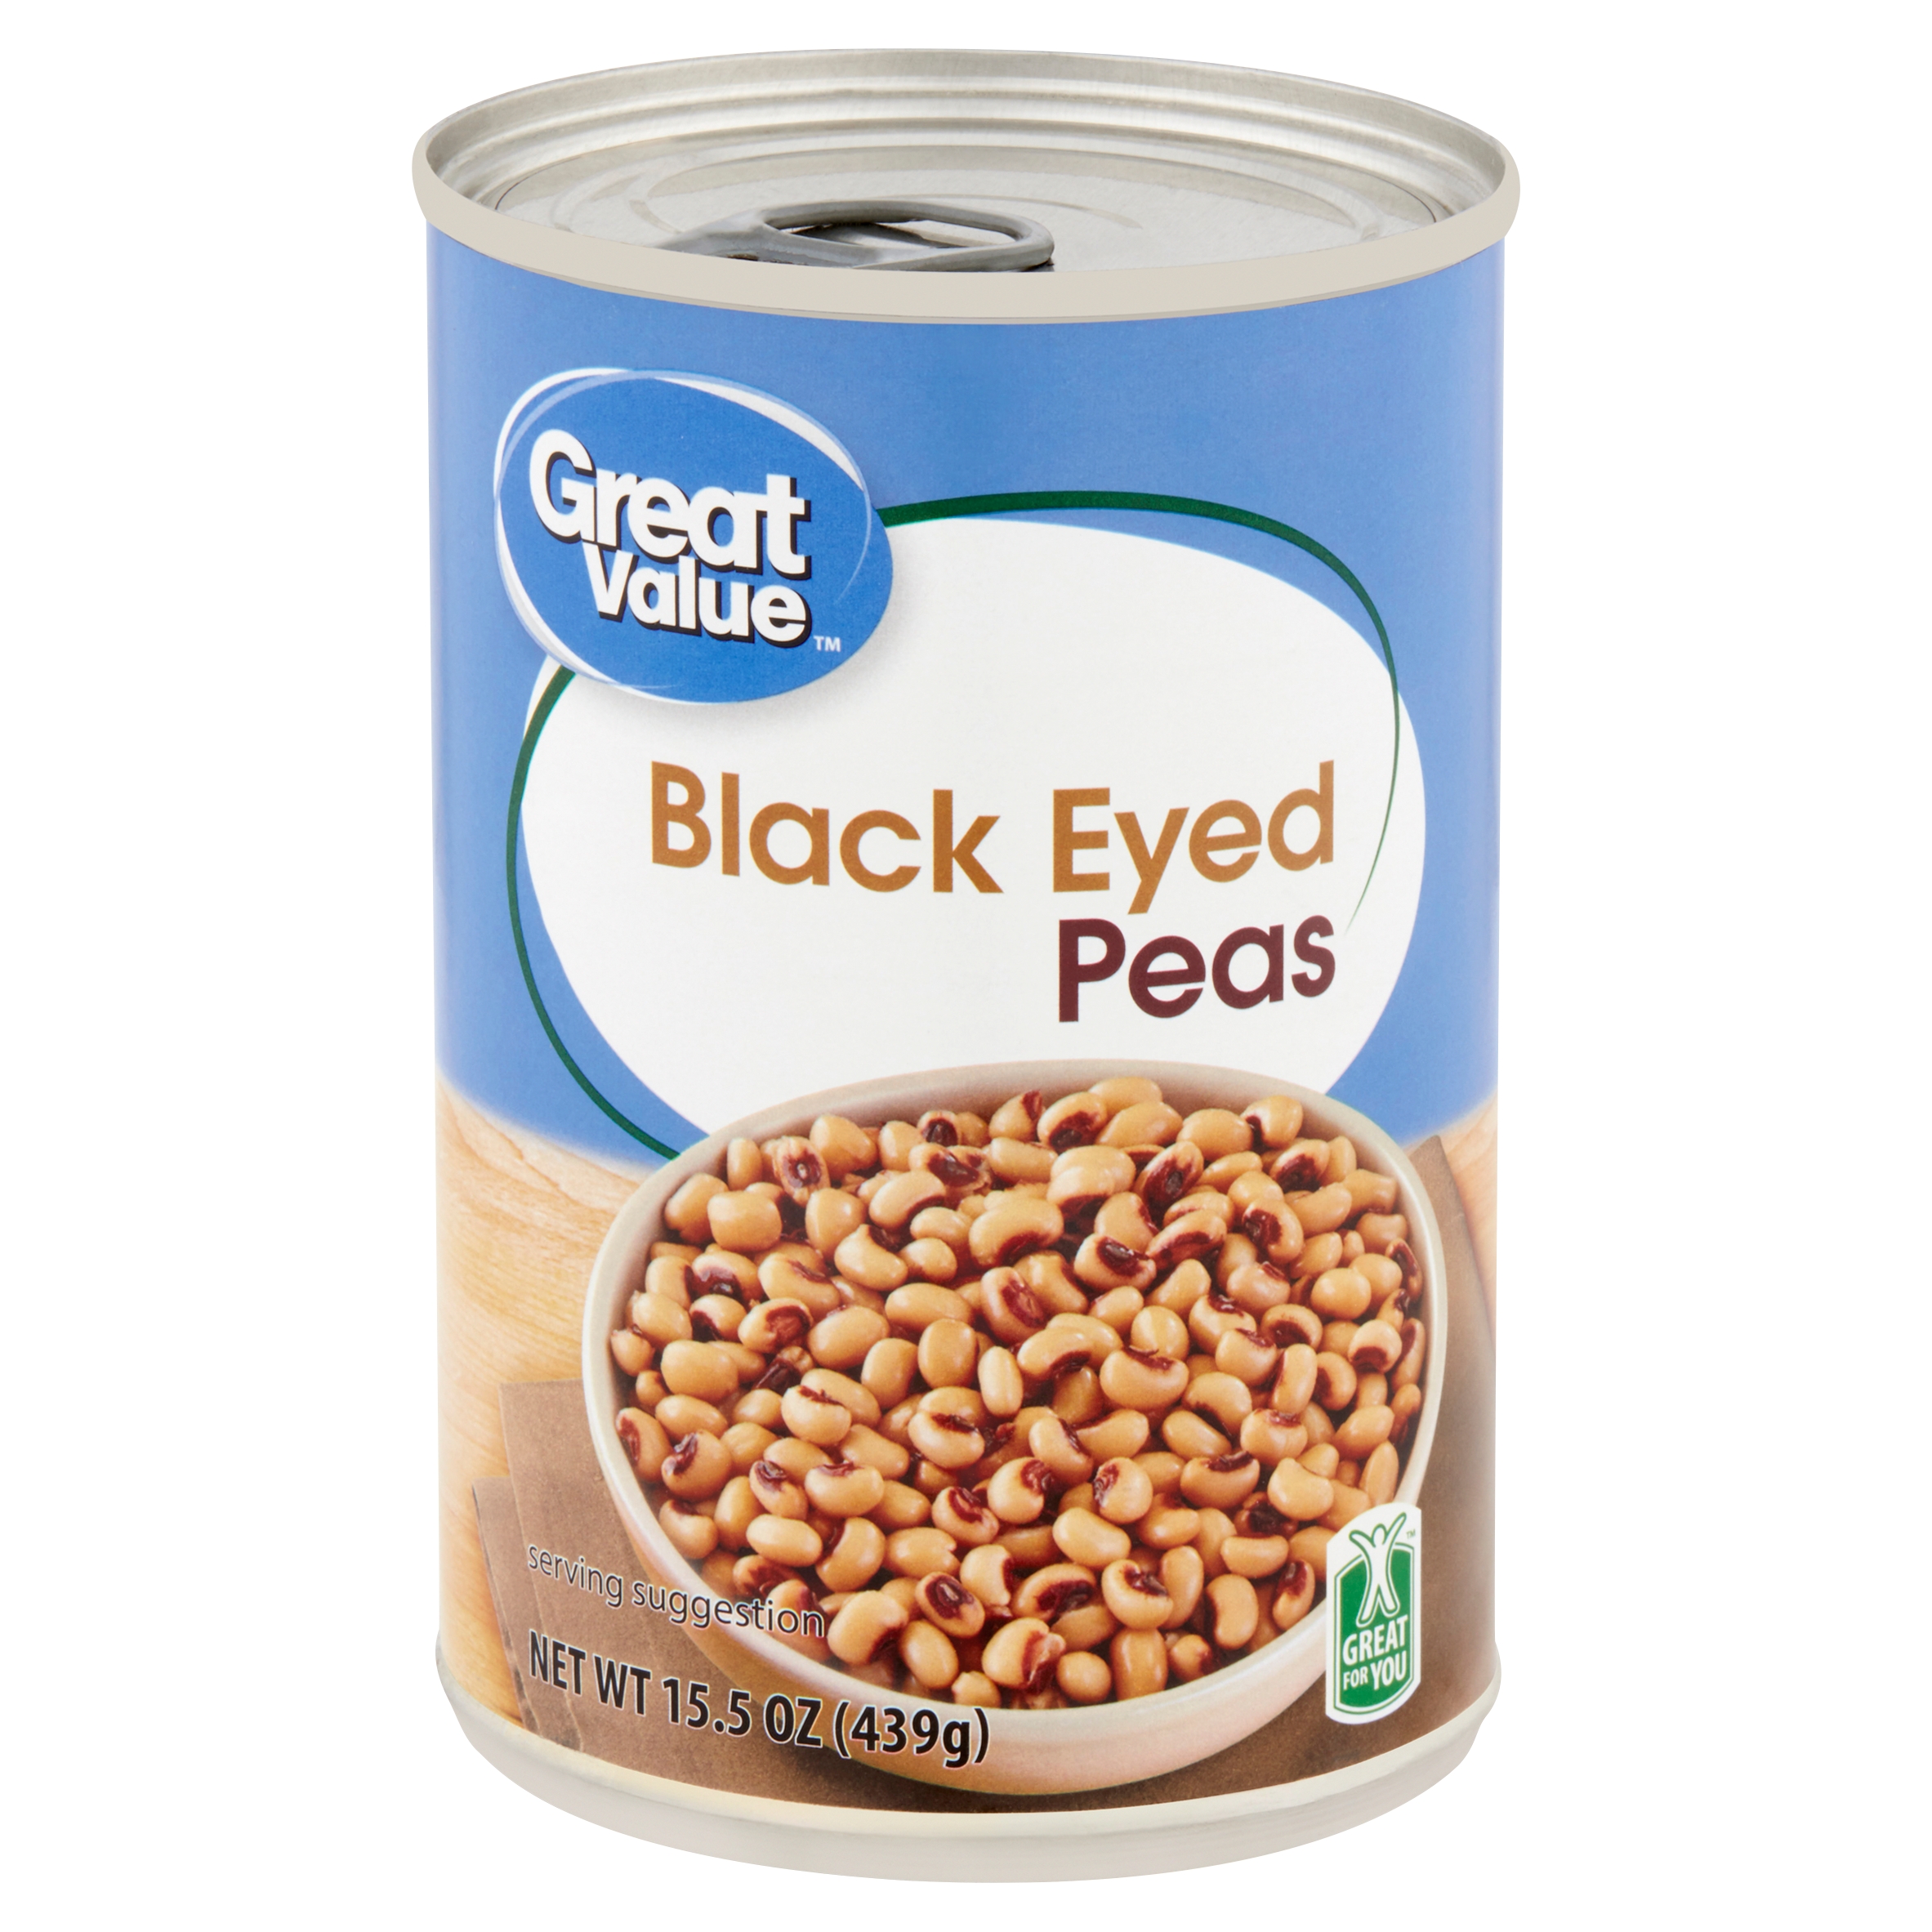 (4 Pack) Great Value Blackeyed Peas, 15.5 Oz Image